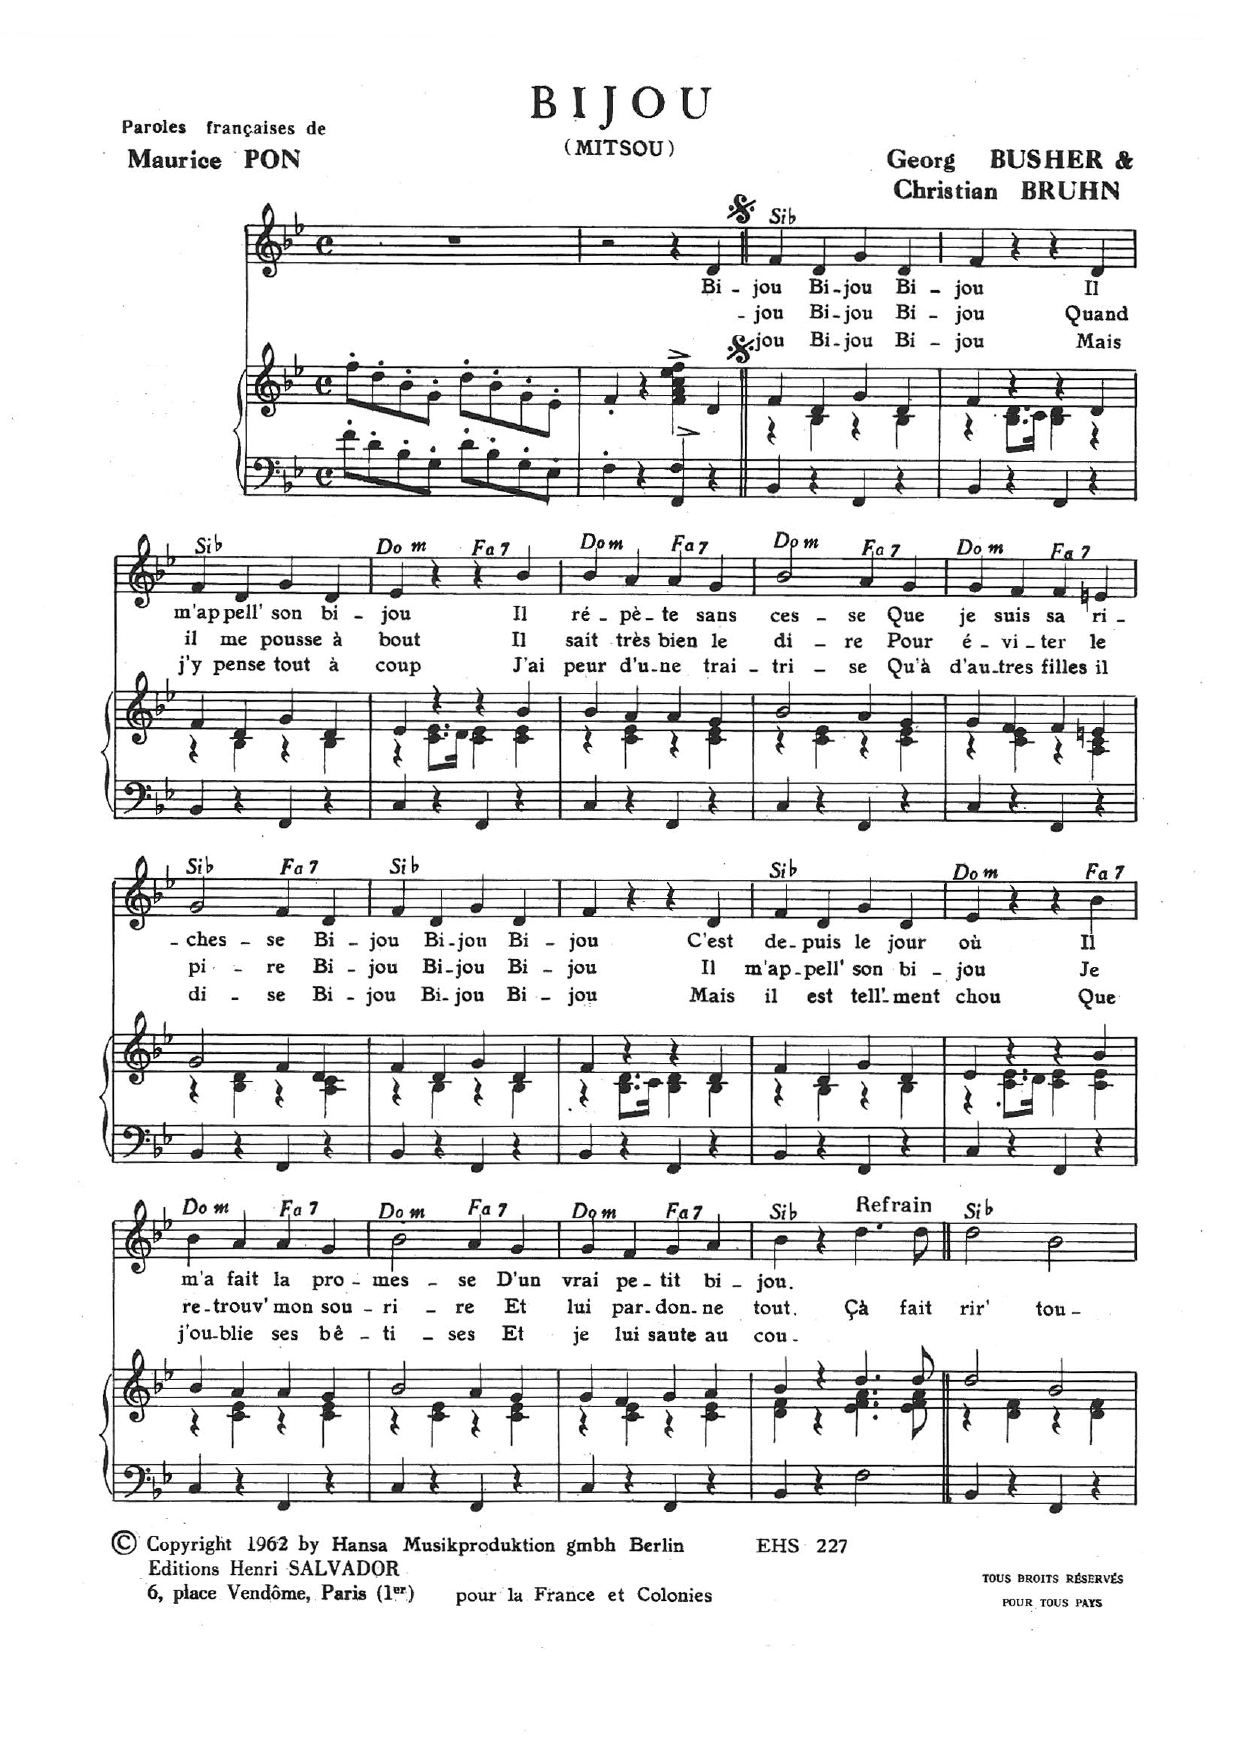 Henri Salvador Bijou Sheet Music Notes & Chords for Piano & Vocal - Download or Print PDF